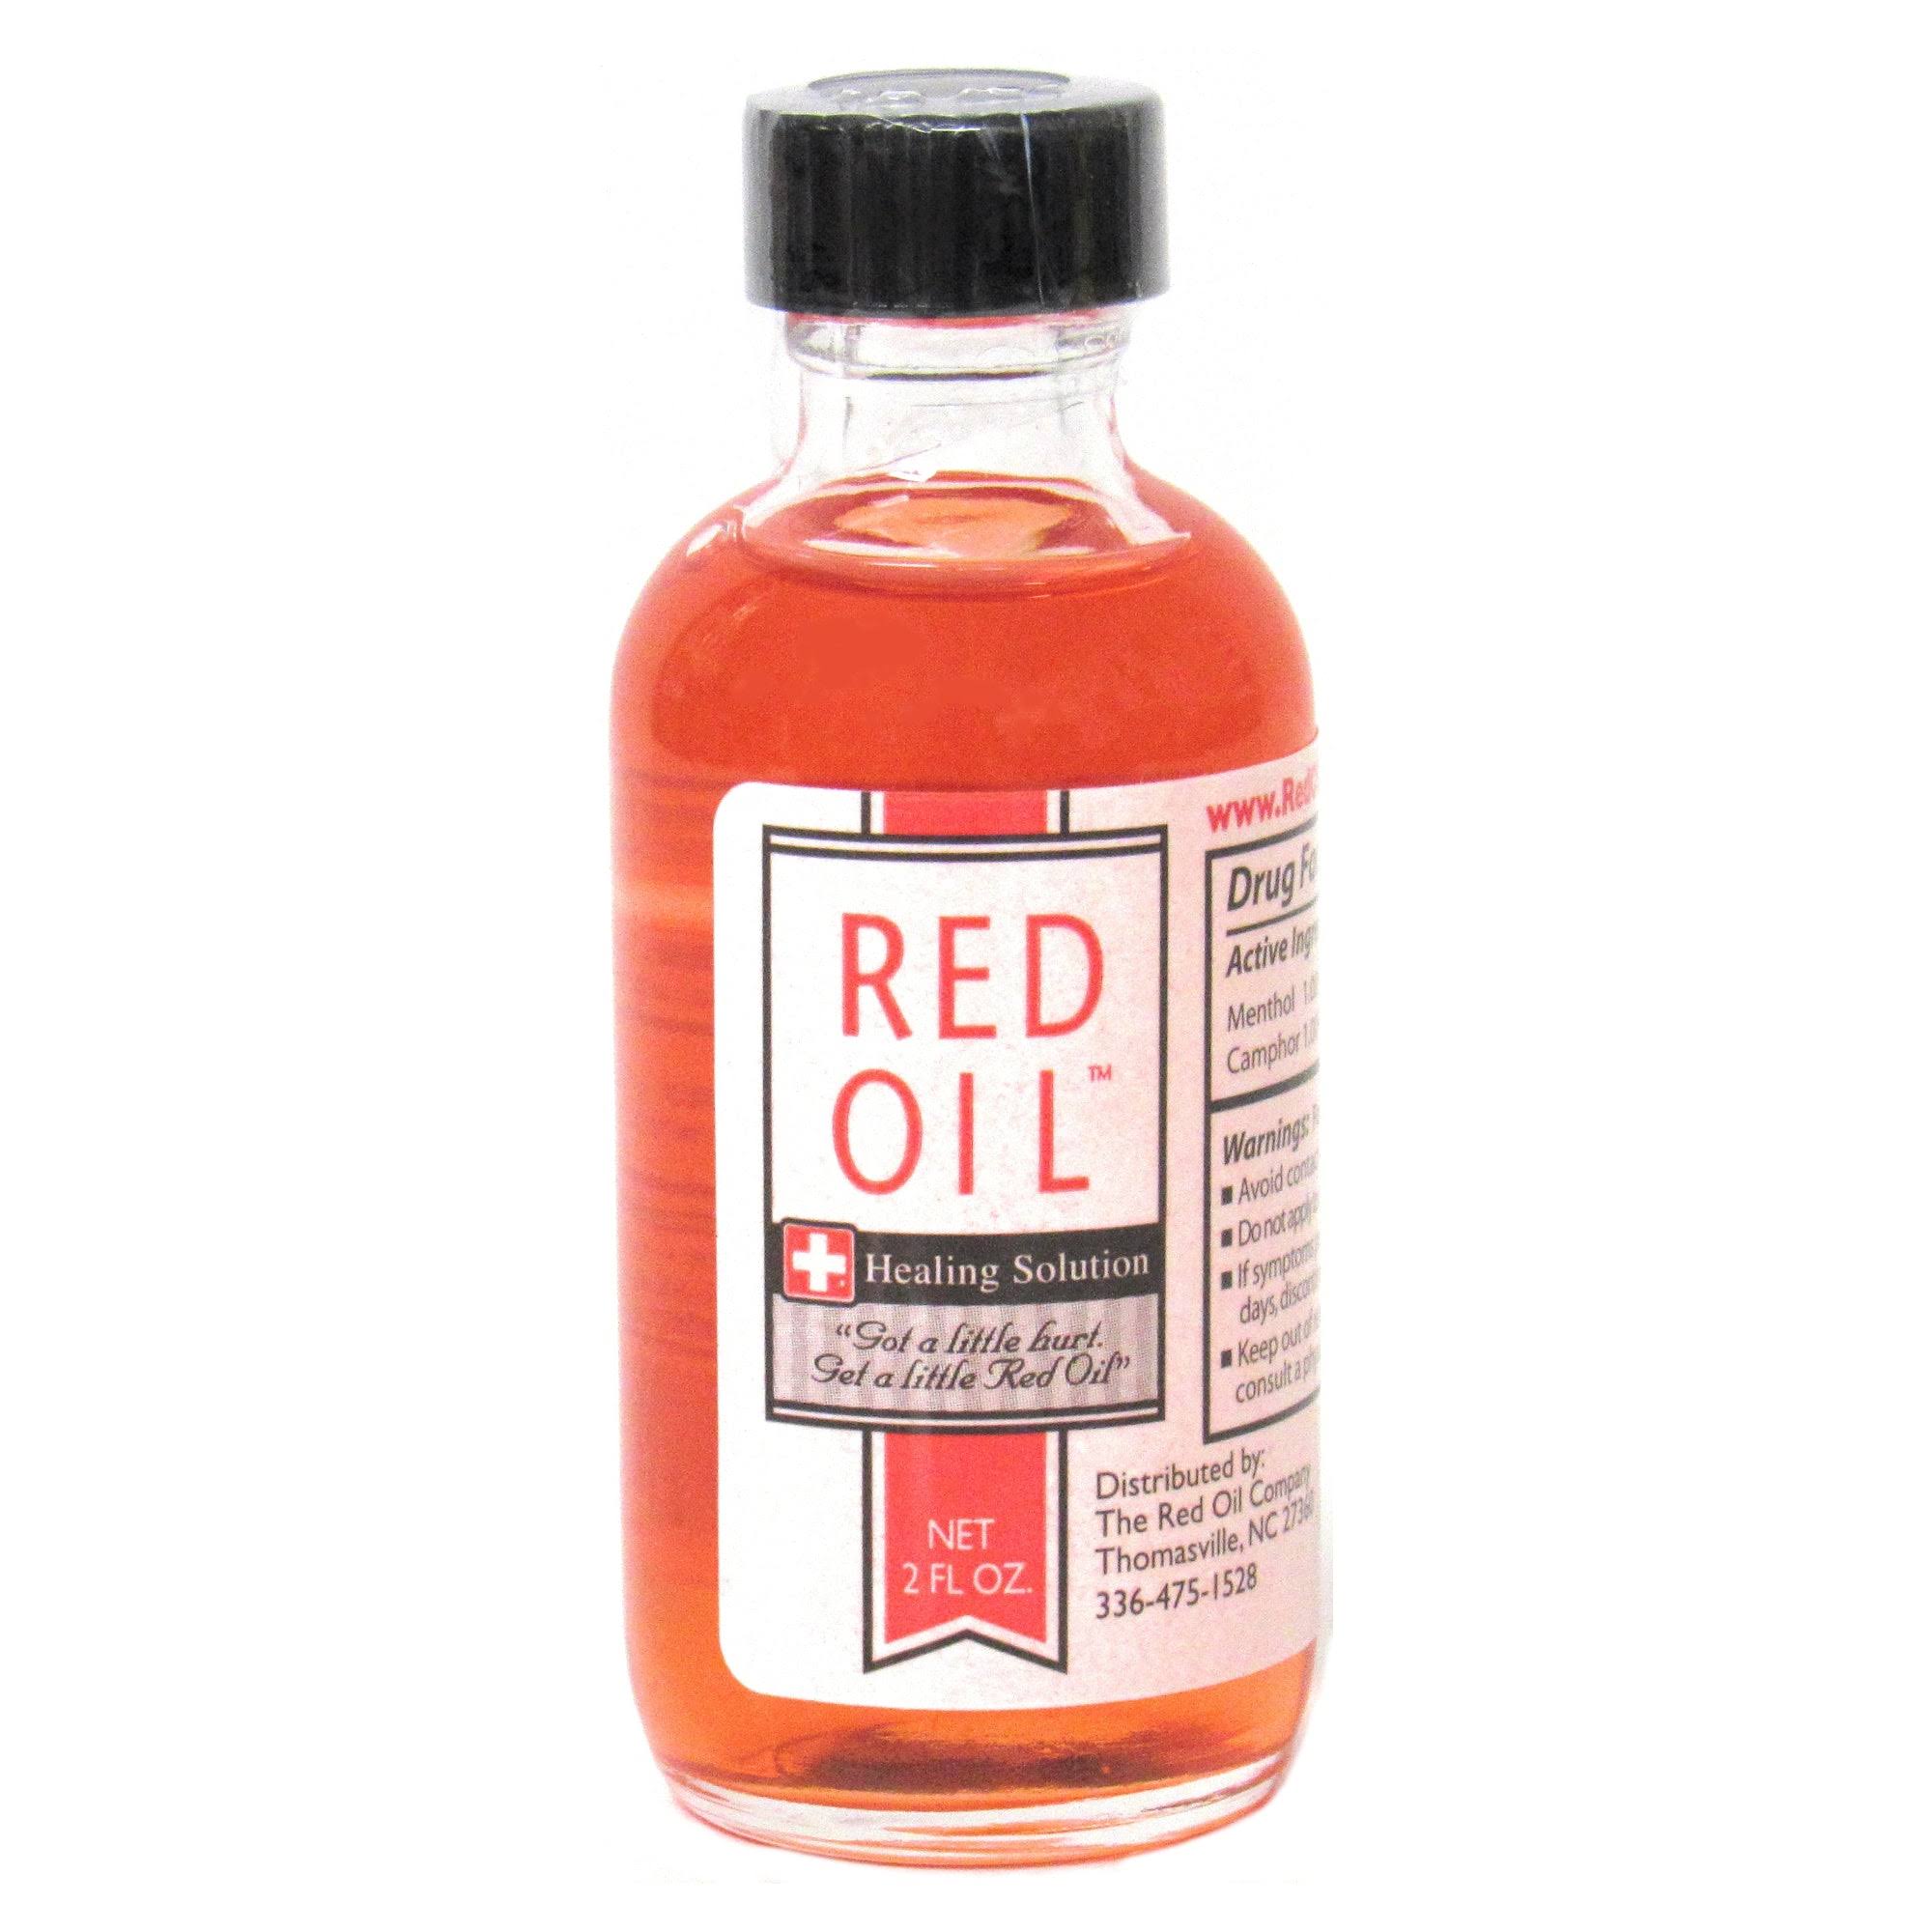 Red Oil Healing Solution - 2 oz Bottle